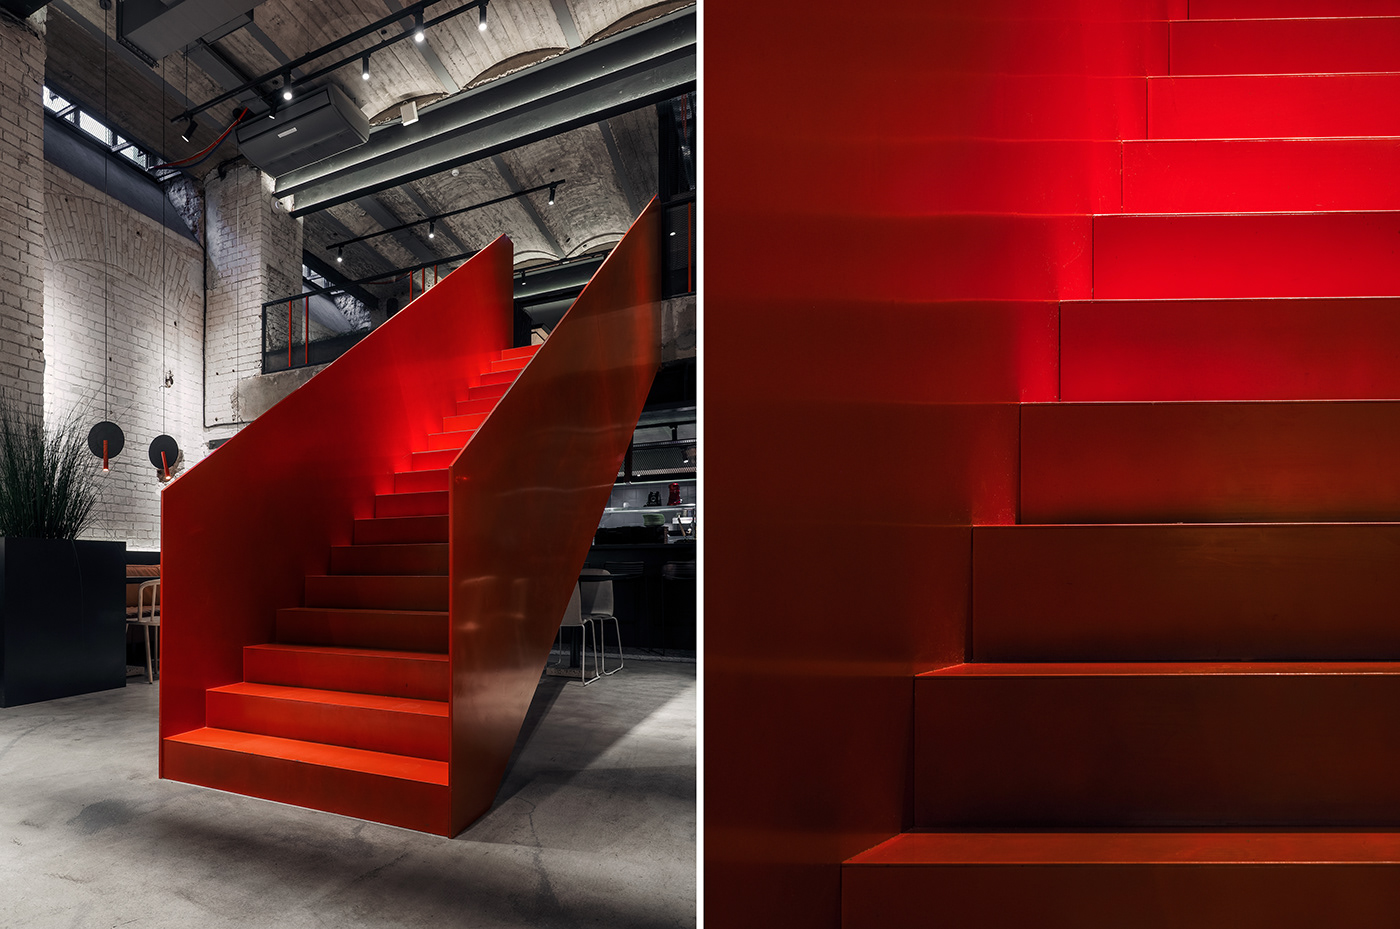 metal concrete modern architecture interior design  red stair Minimalism wood plants